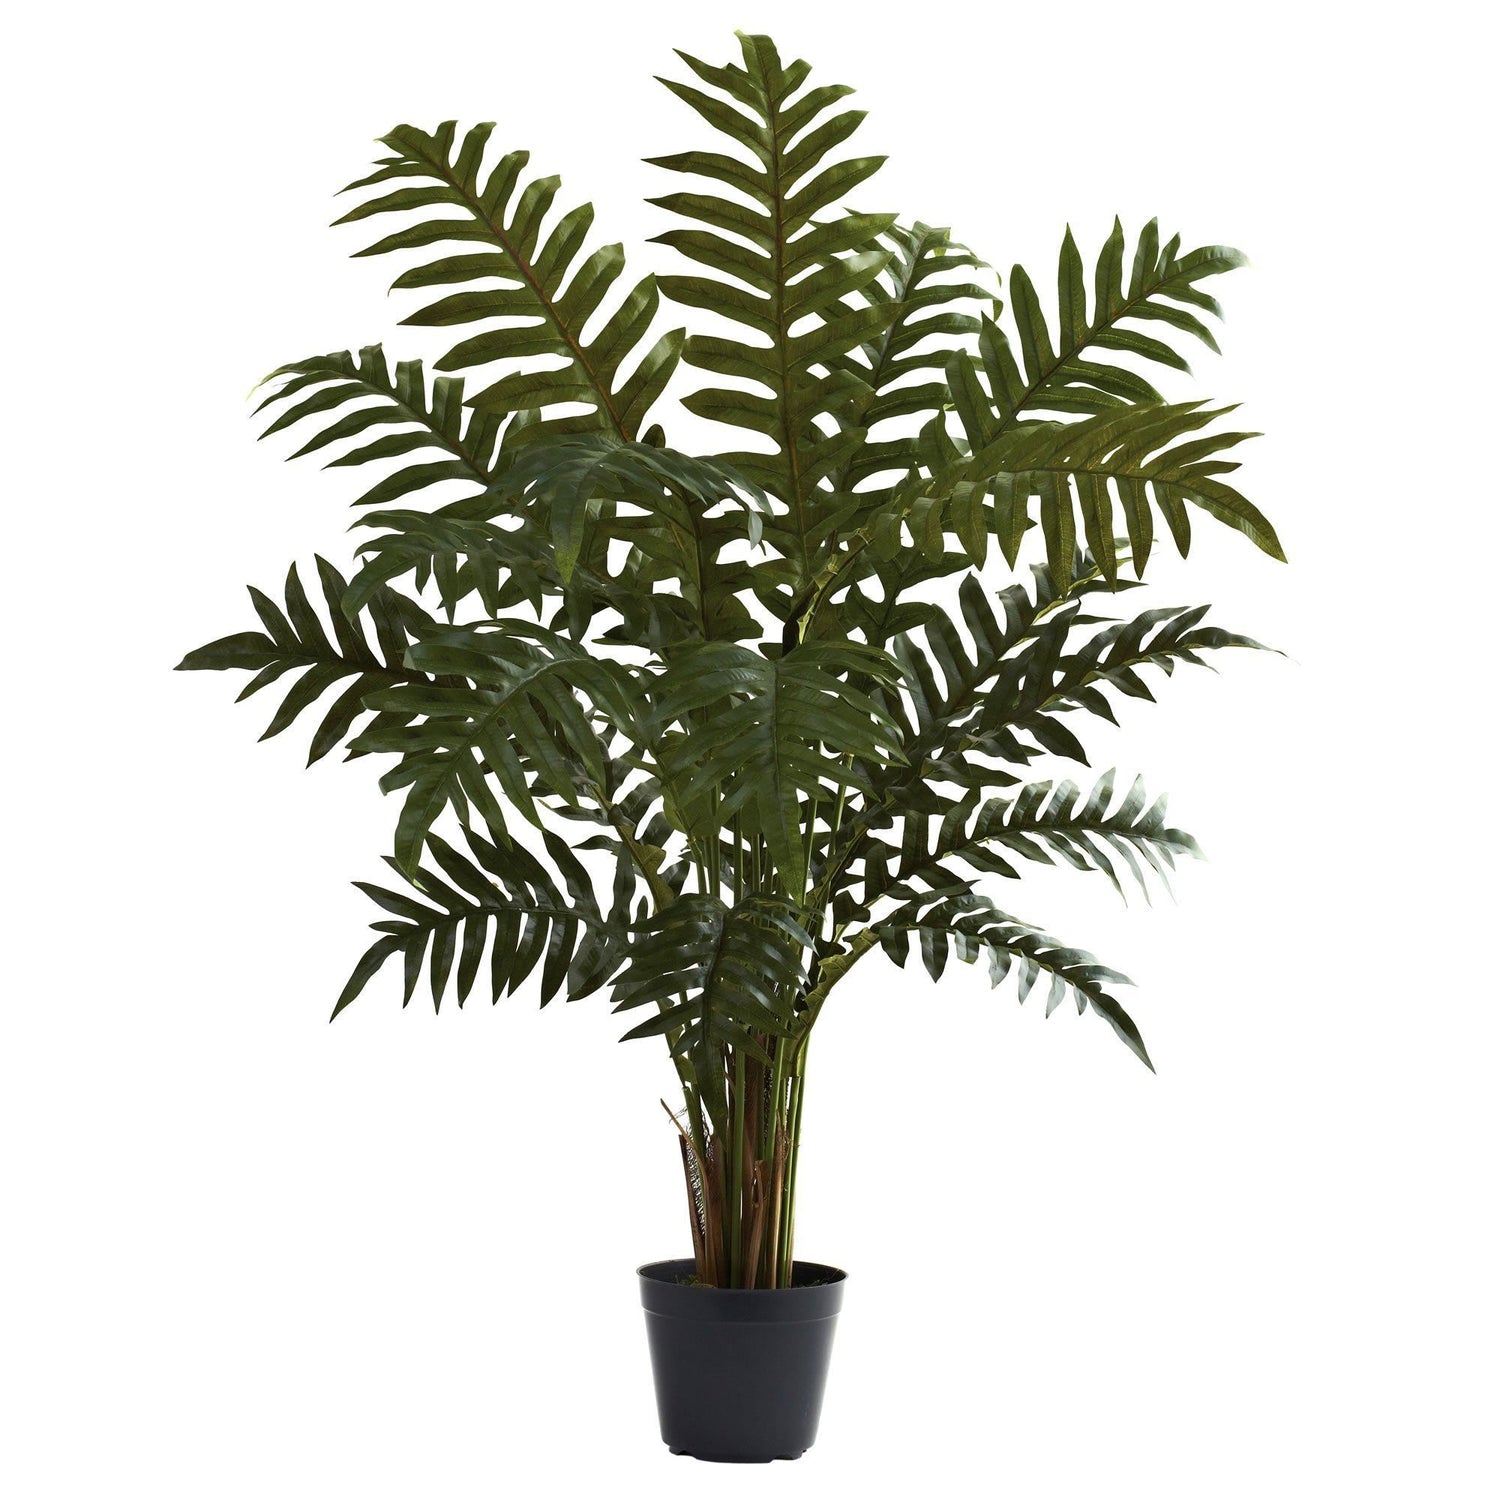 3.5’ Evergreen Plant